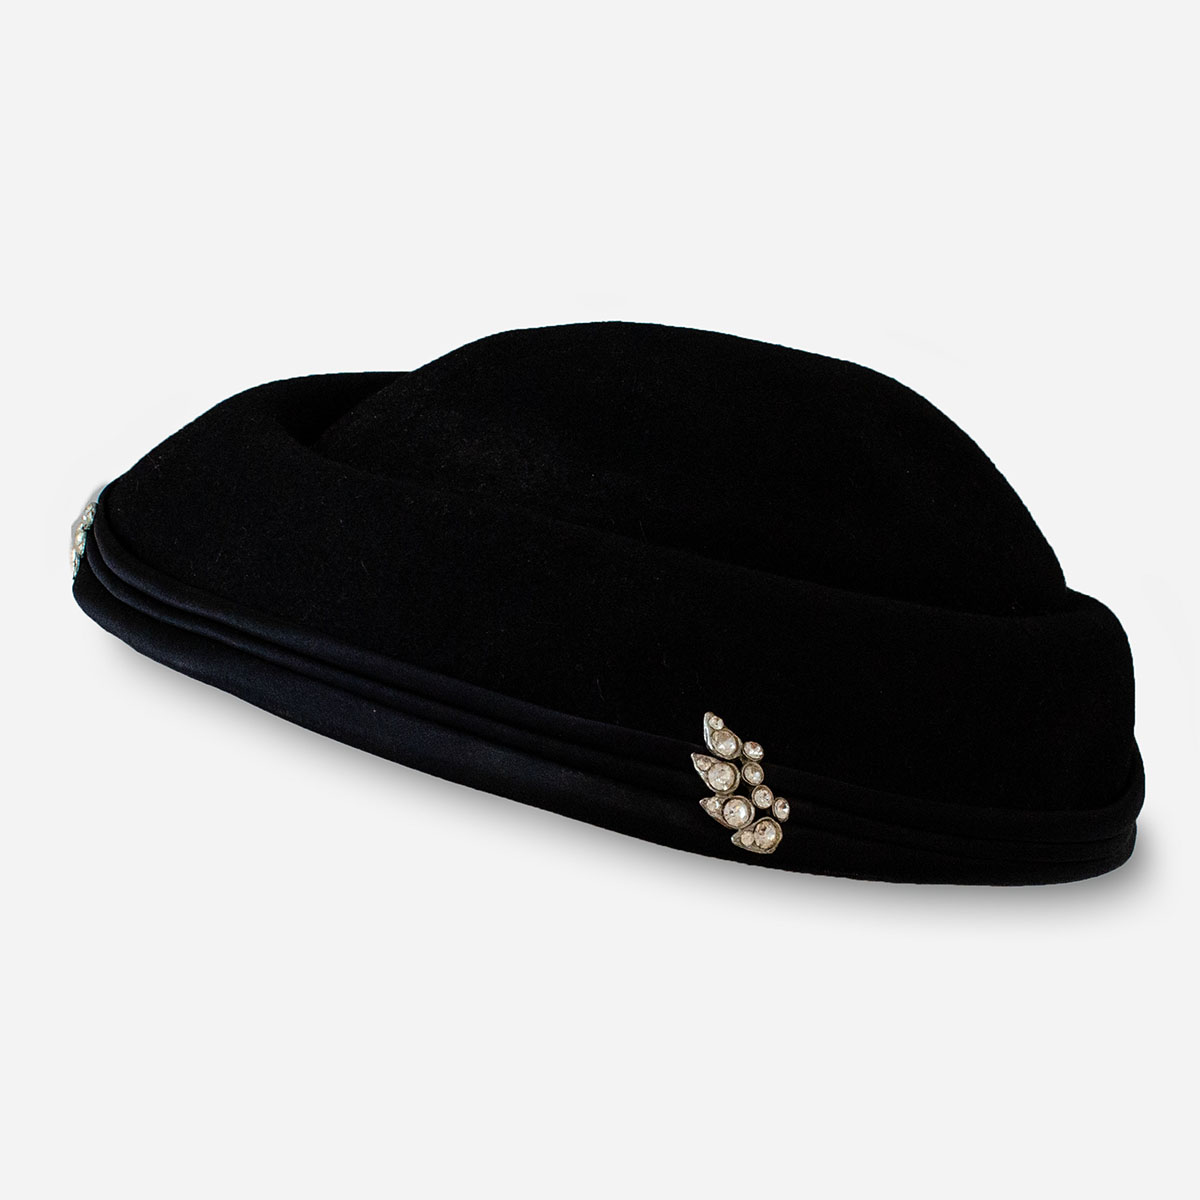 Black dish hat